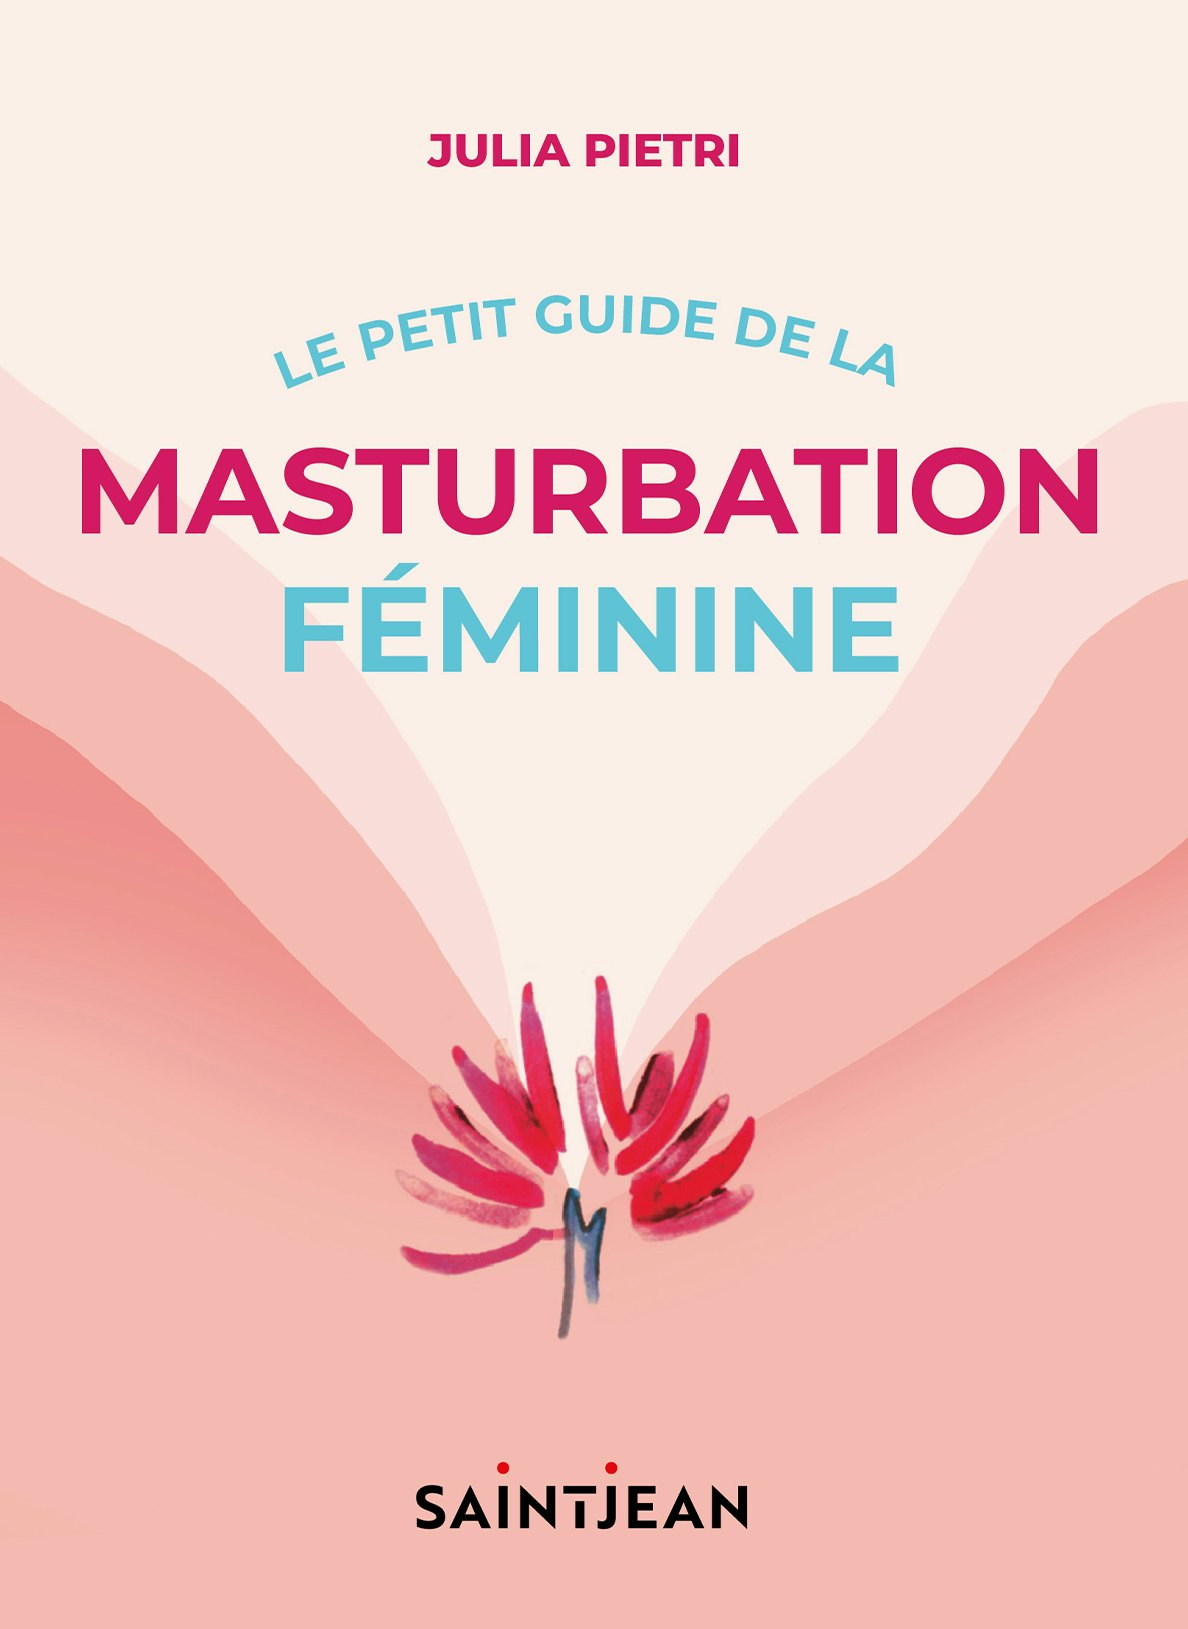 Le petite guide de la masturbation féminine, Julia Pietri